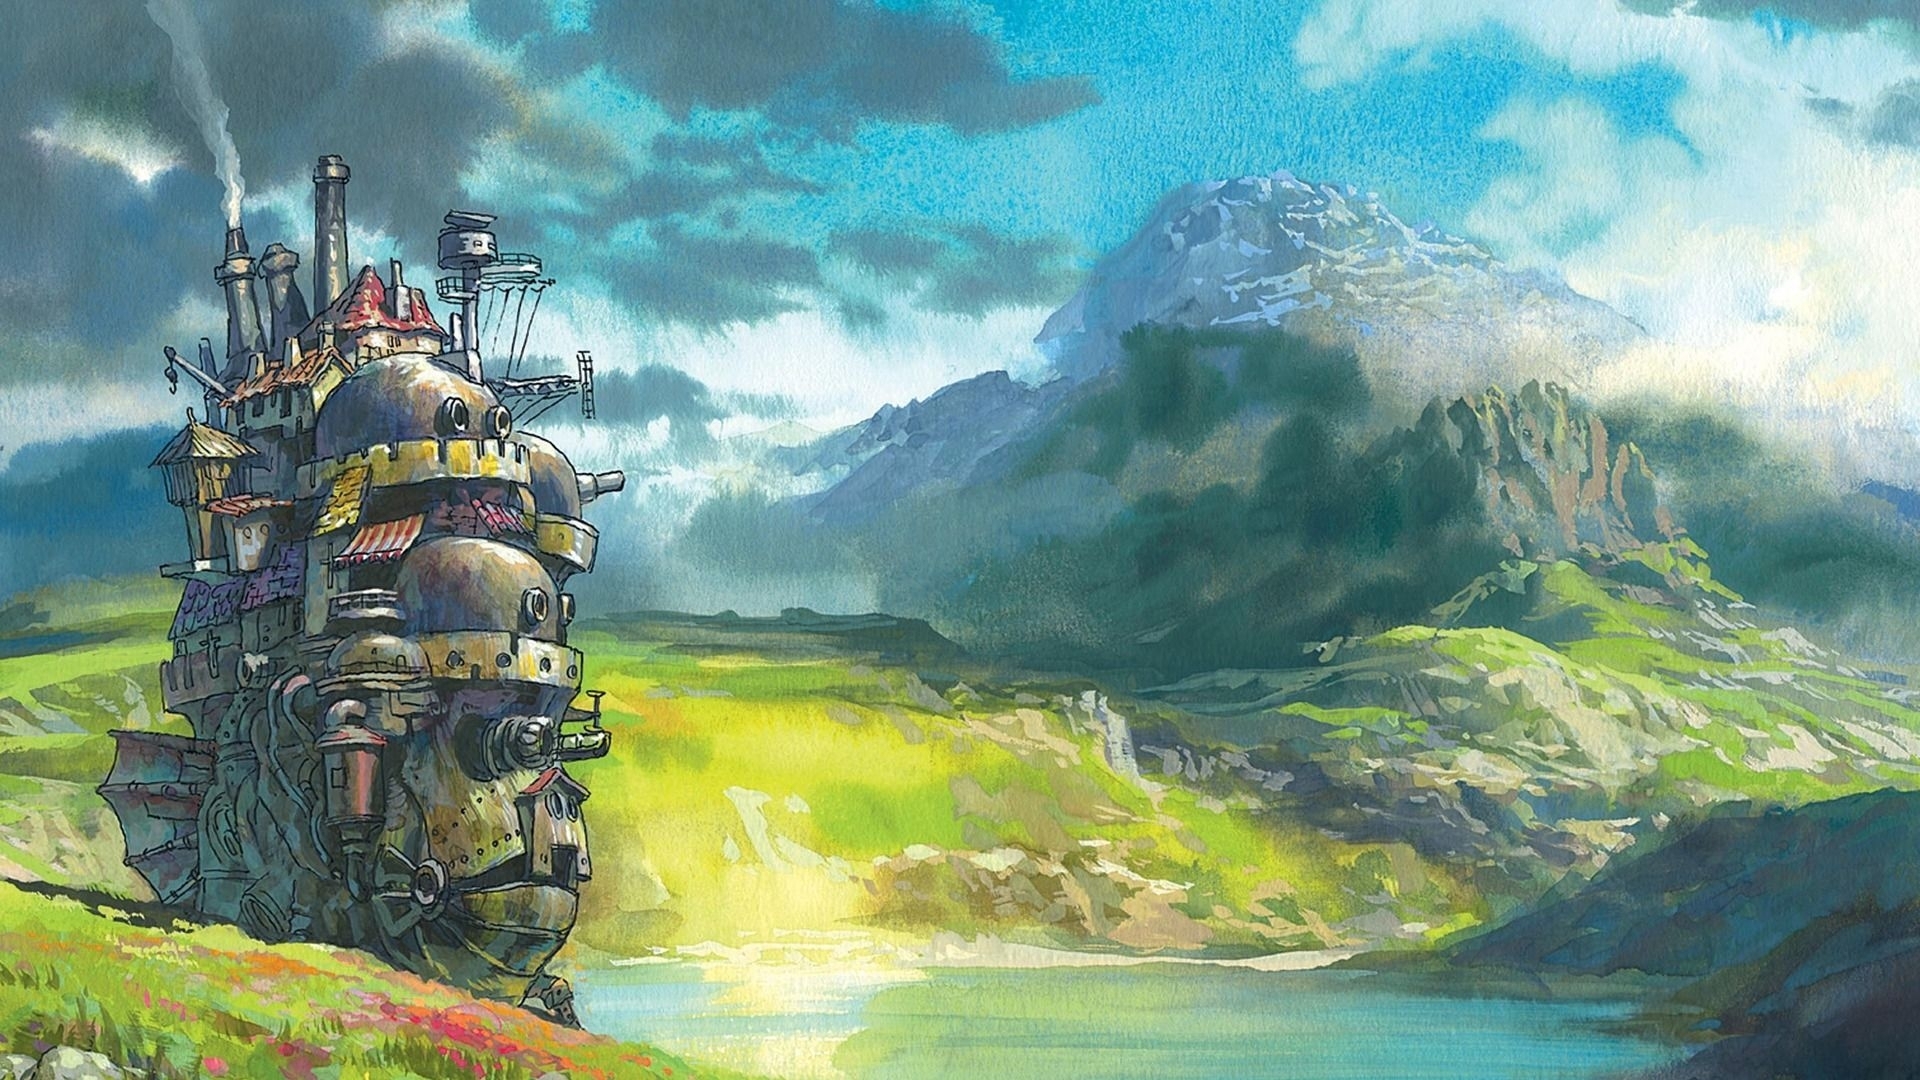 10 Best Studio Ghibli Desktop Wallpaper FULL HD 1080p For PC Background